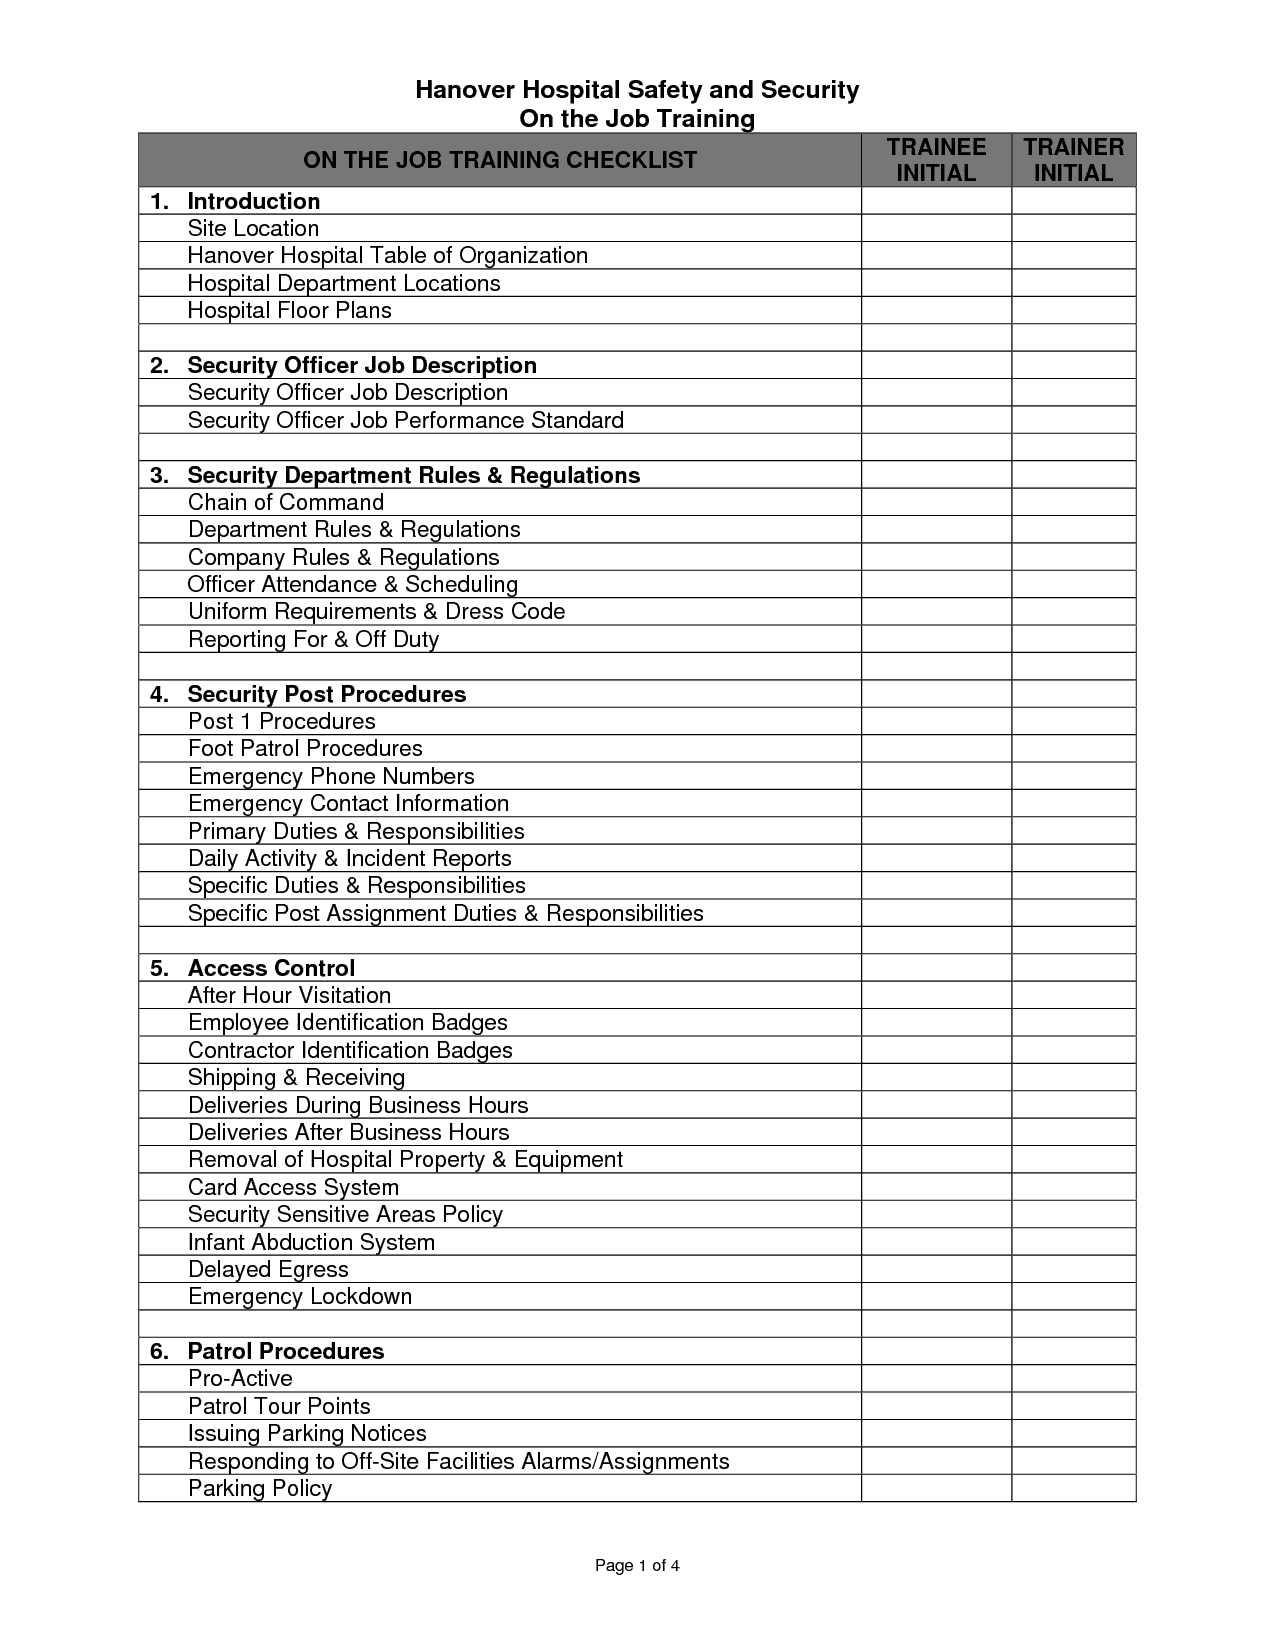 training-checklist-templates-word-excel-fomats